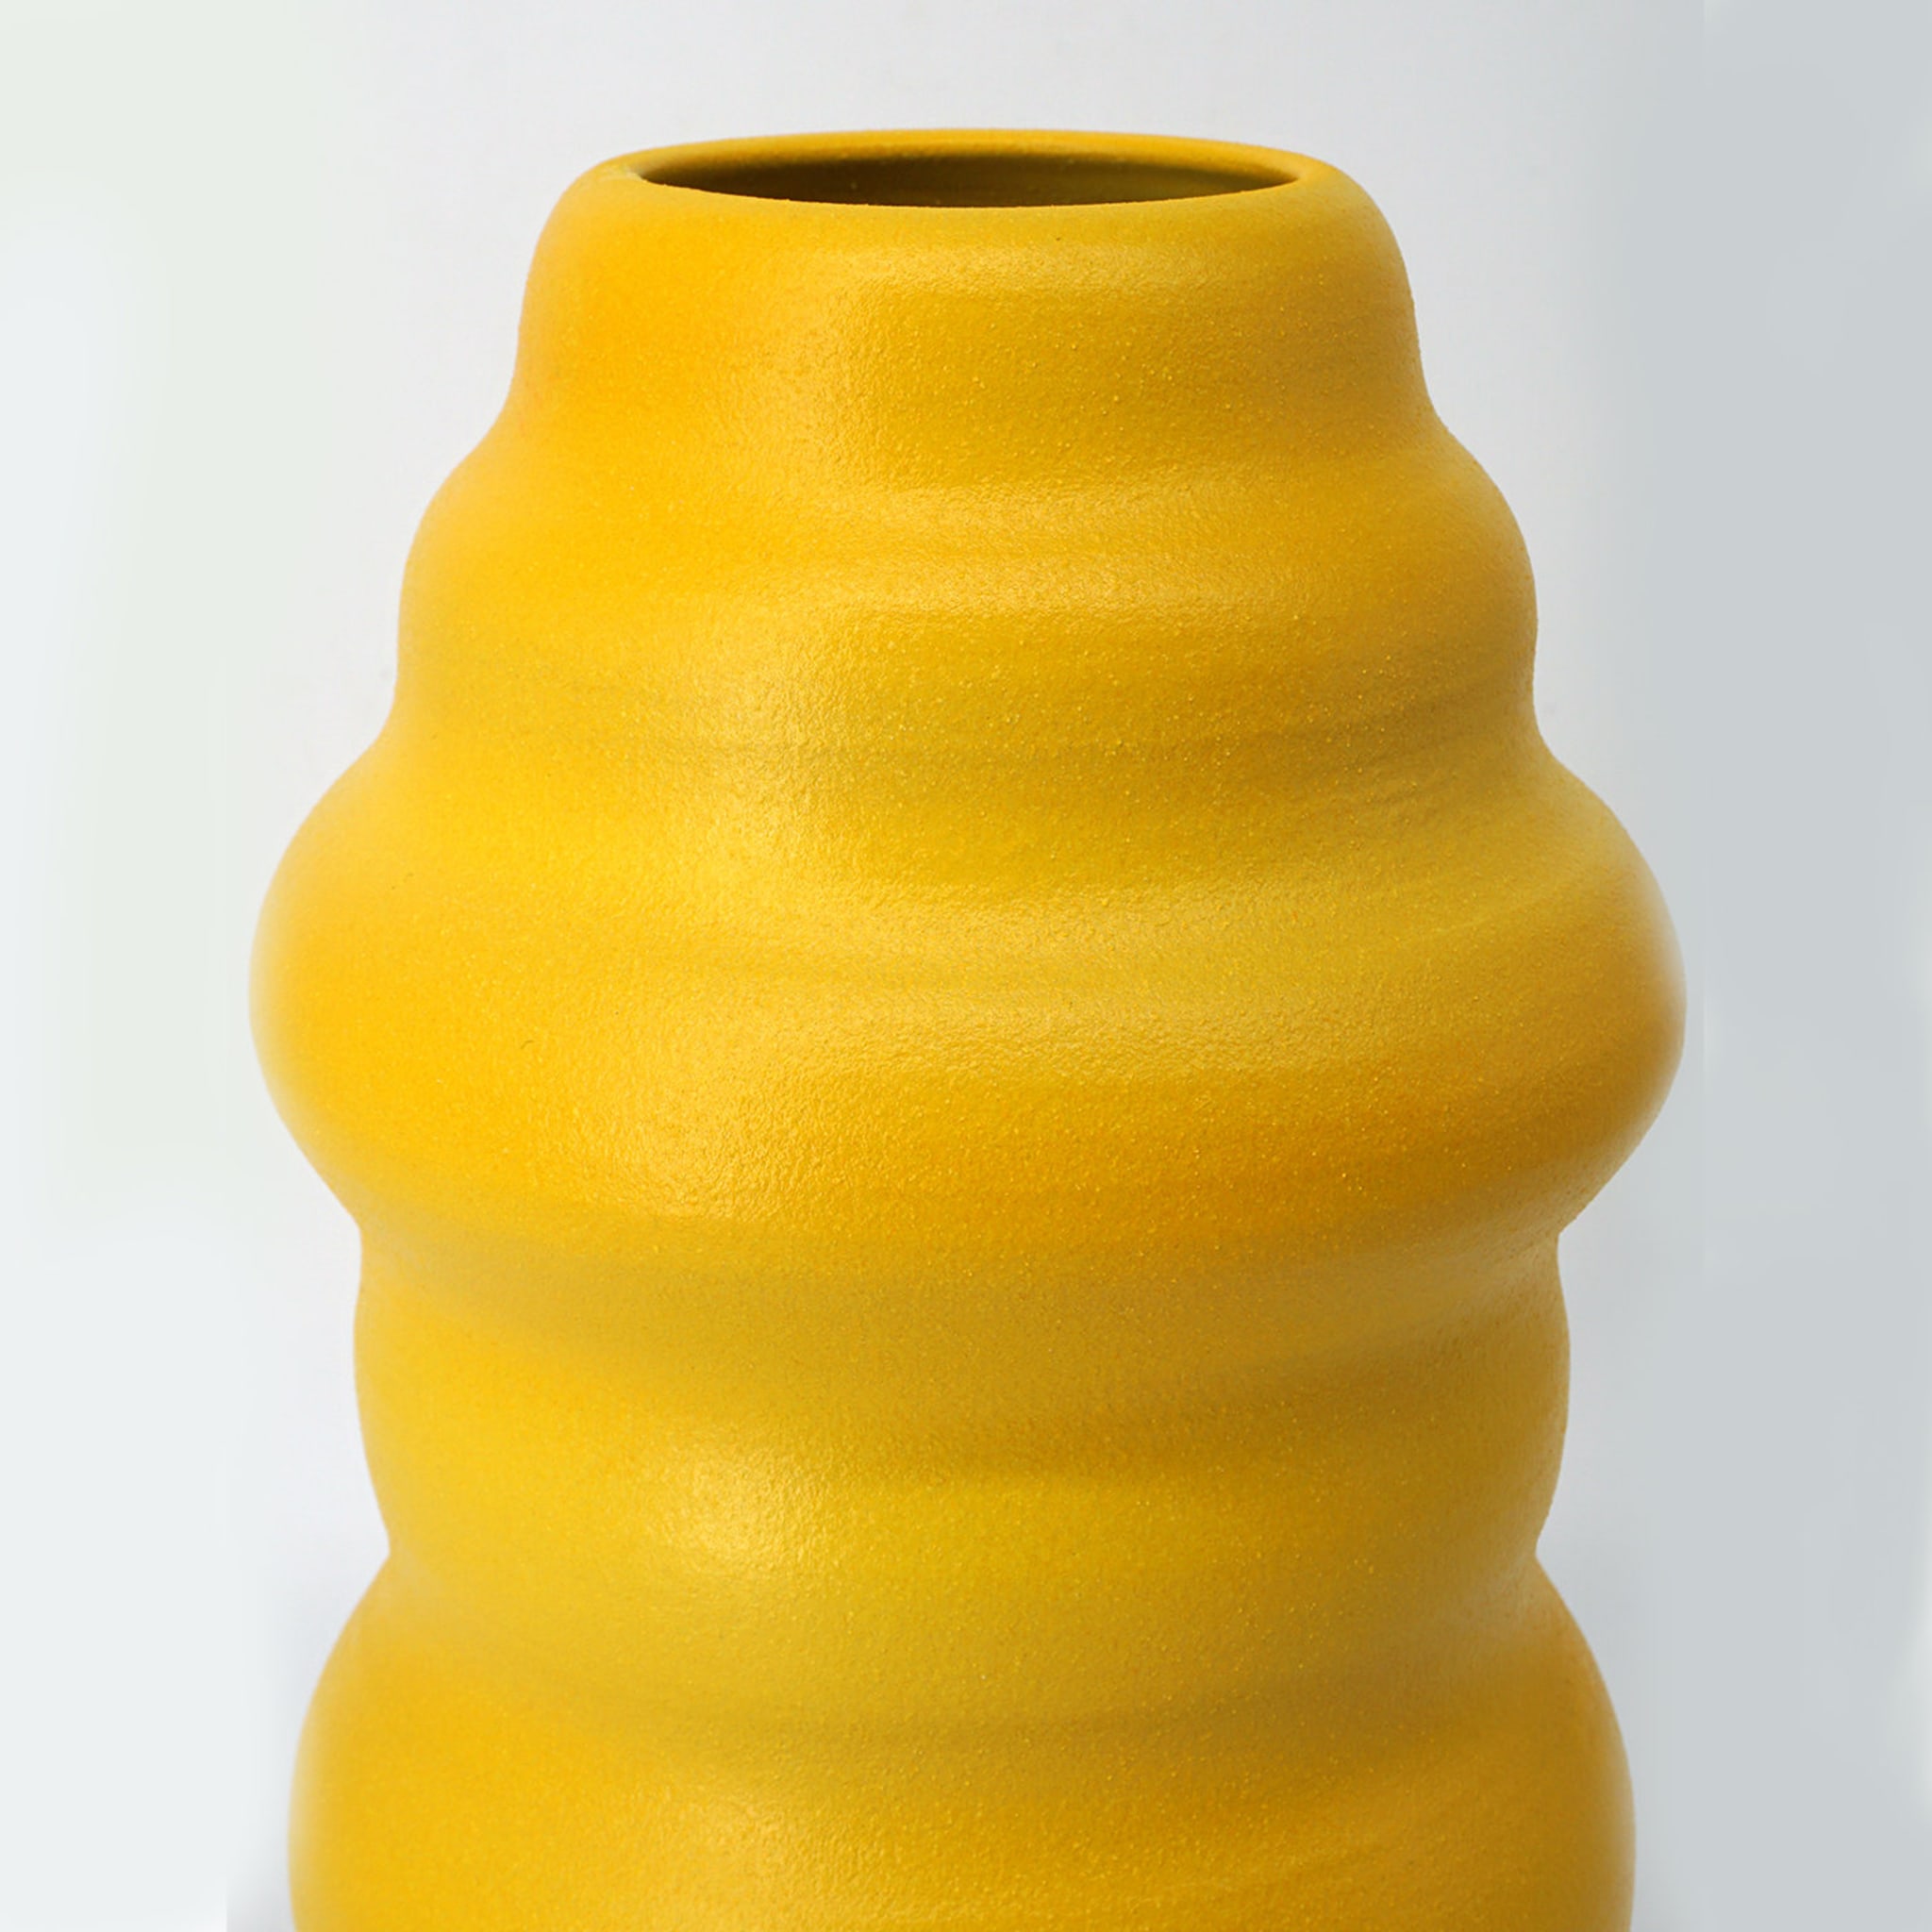 Crisalide Yellow Vase #1 - Alternative view 3